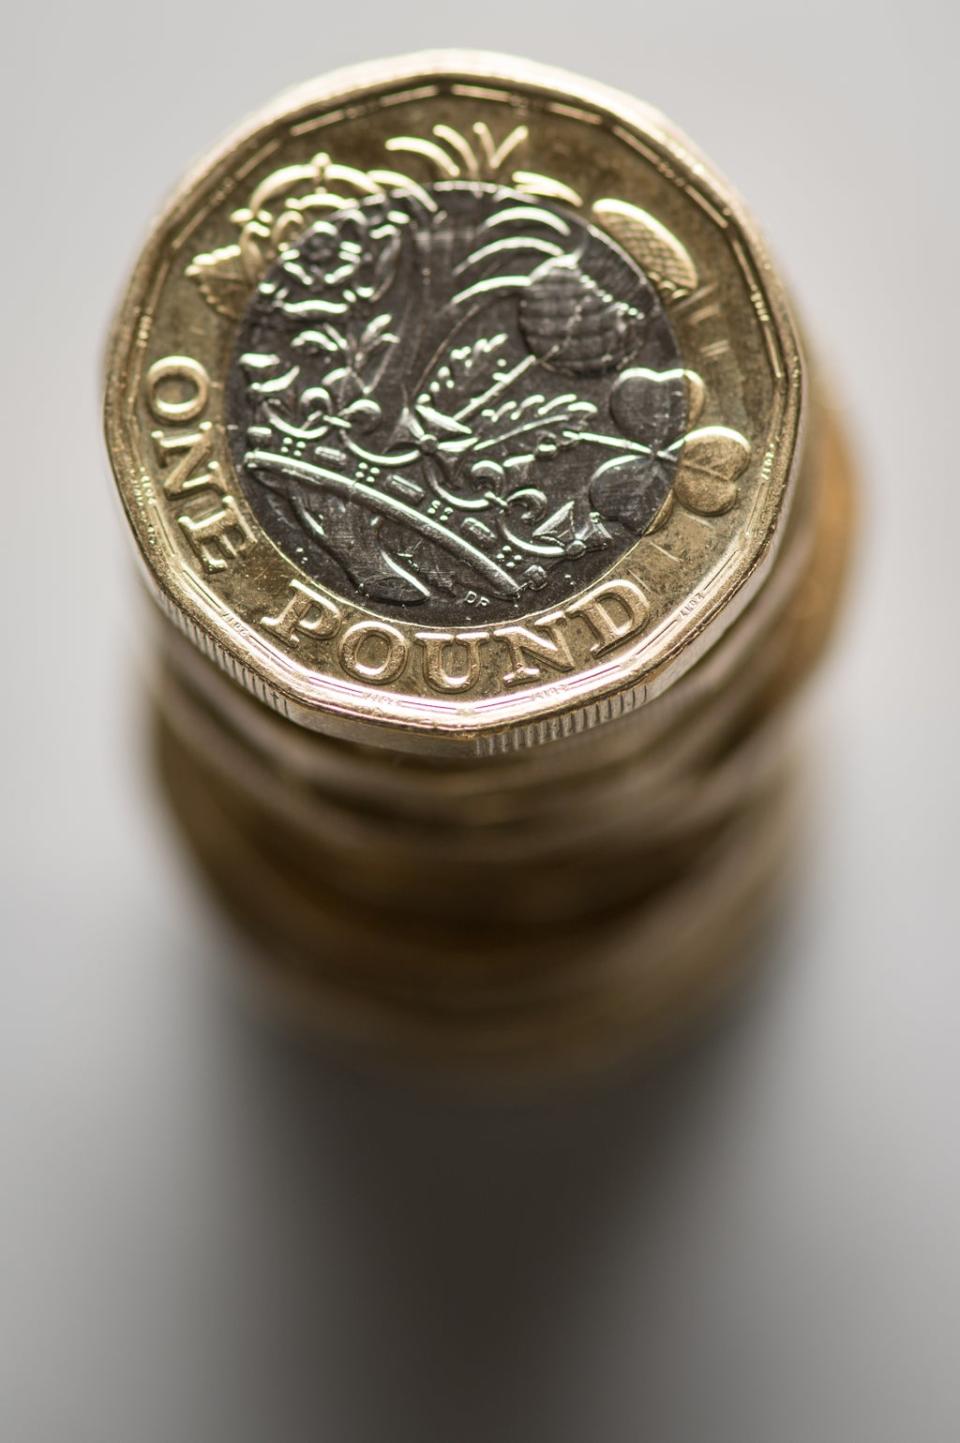 Artist Michael Armitage will create a new design for £1 coins (Dominic Lipinski/PA) (PA Archive)